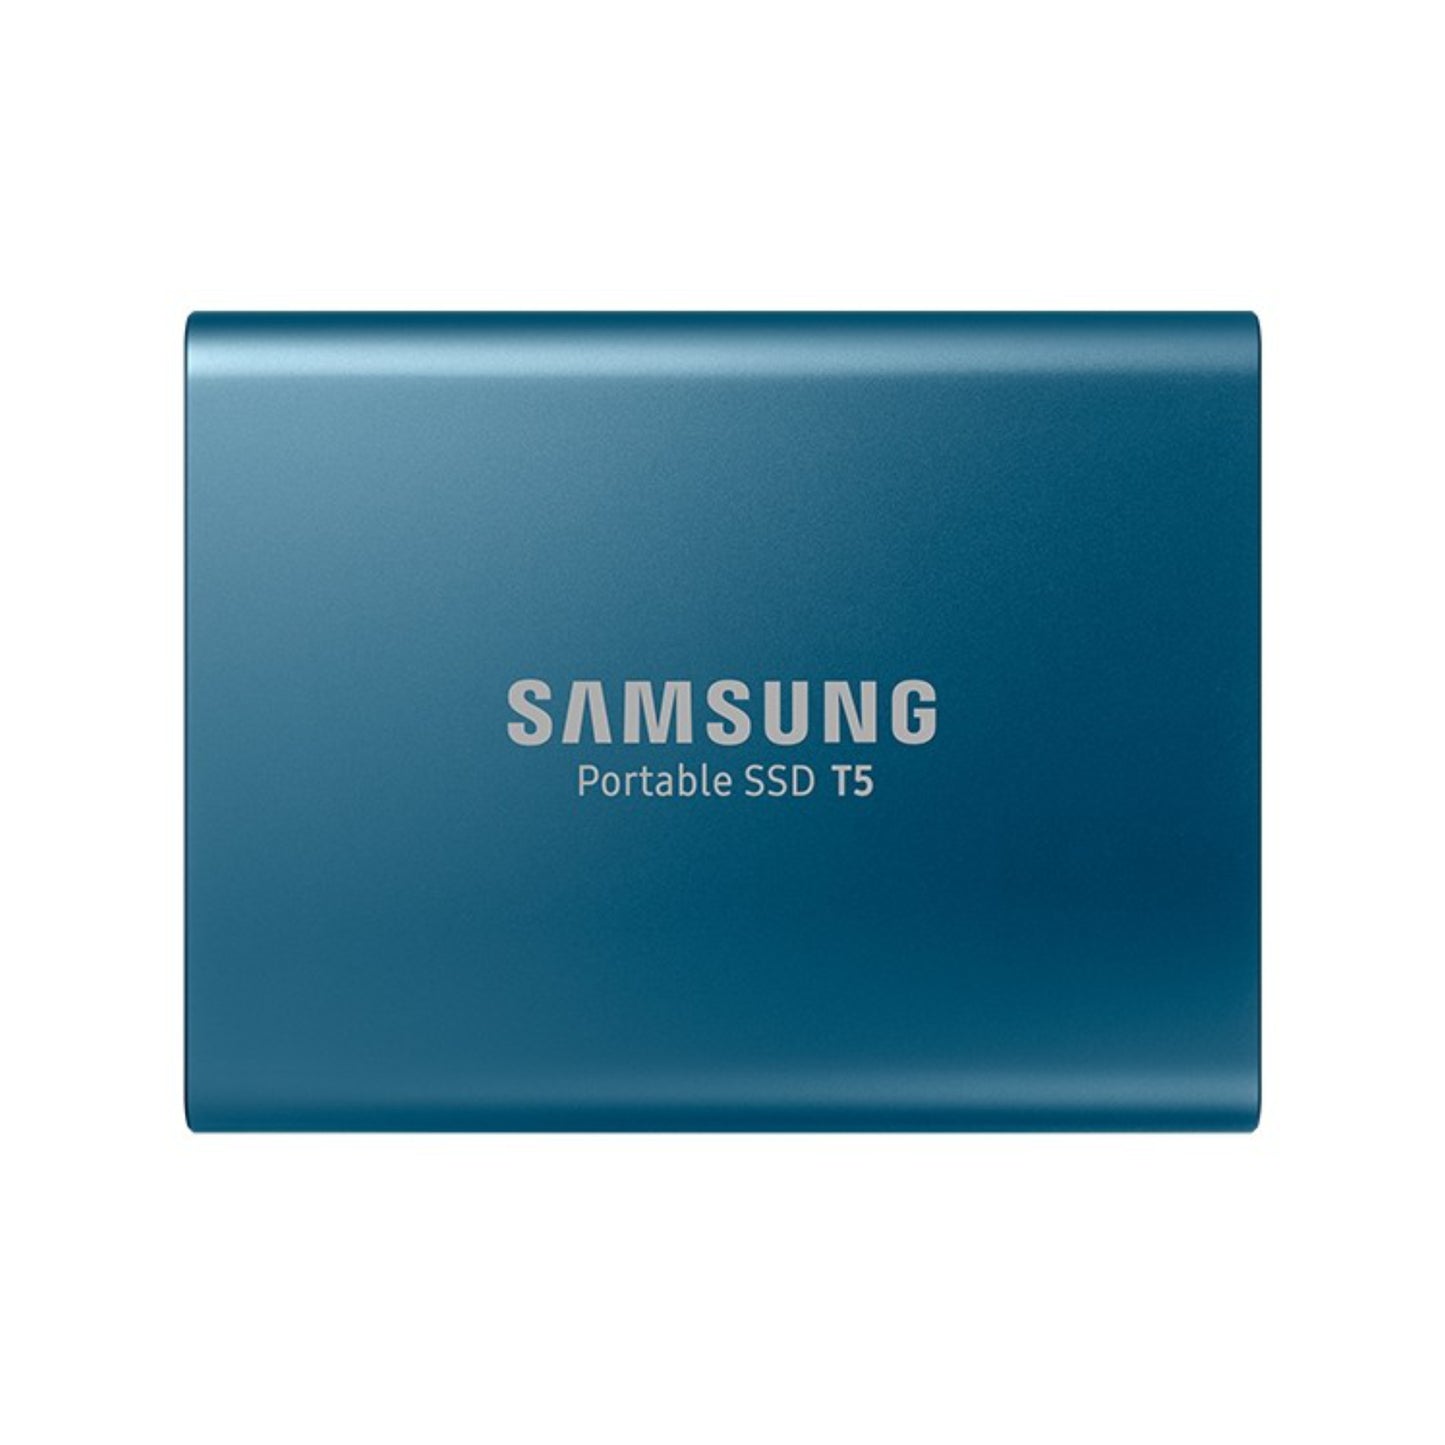 Hire Samsung T5 500GB SSD Memory at Topic Rentals